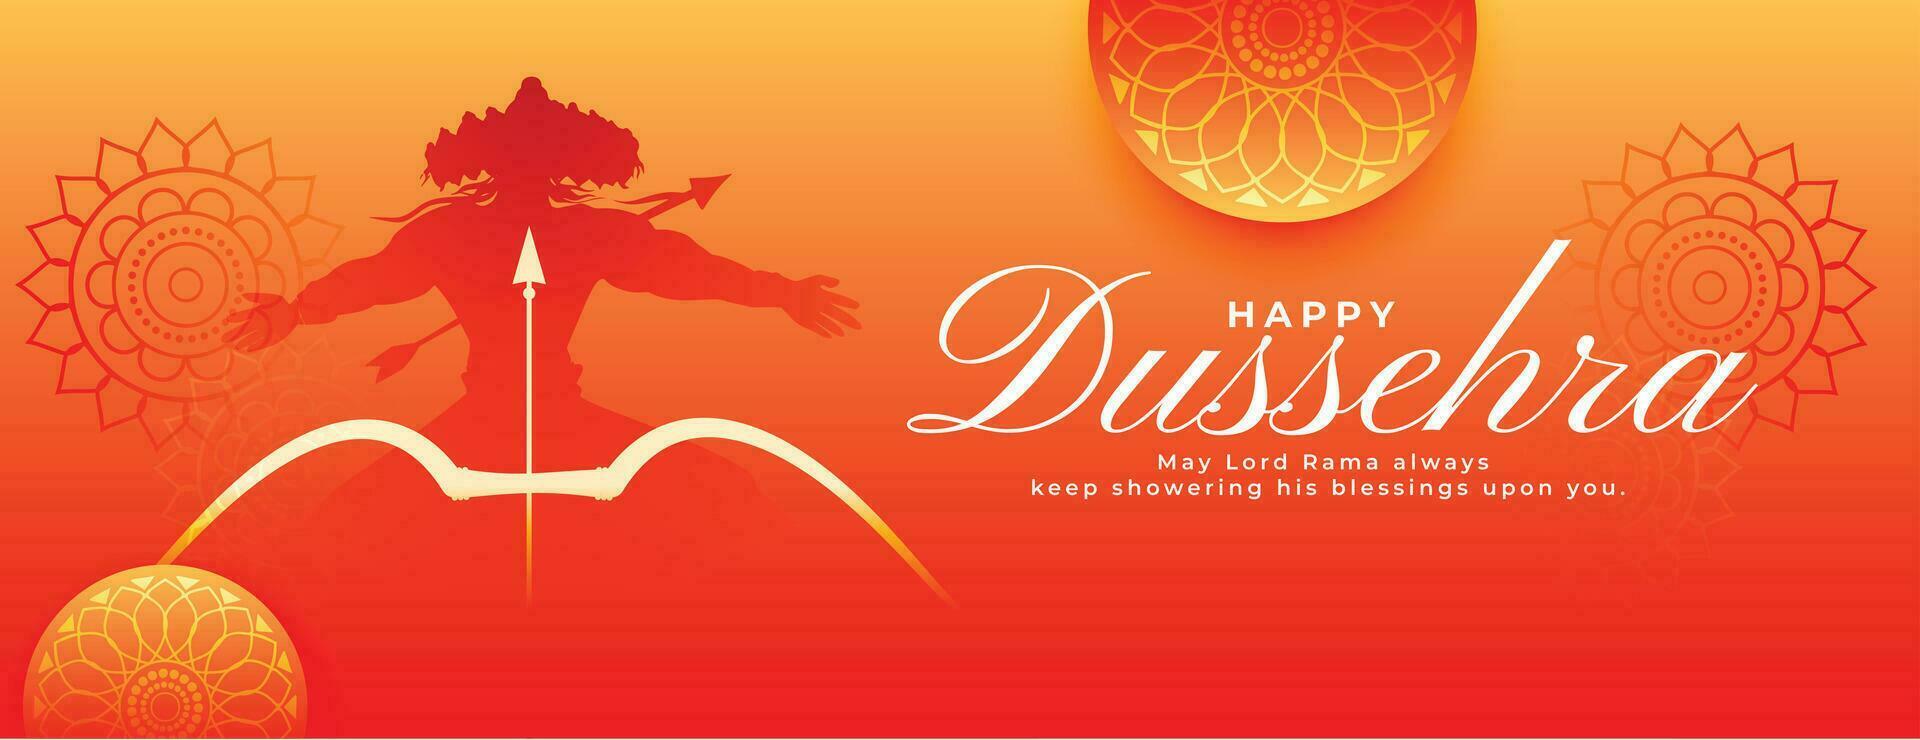 traditionell glücklich Dussehra Festival Banner Design vektor